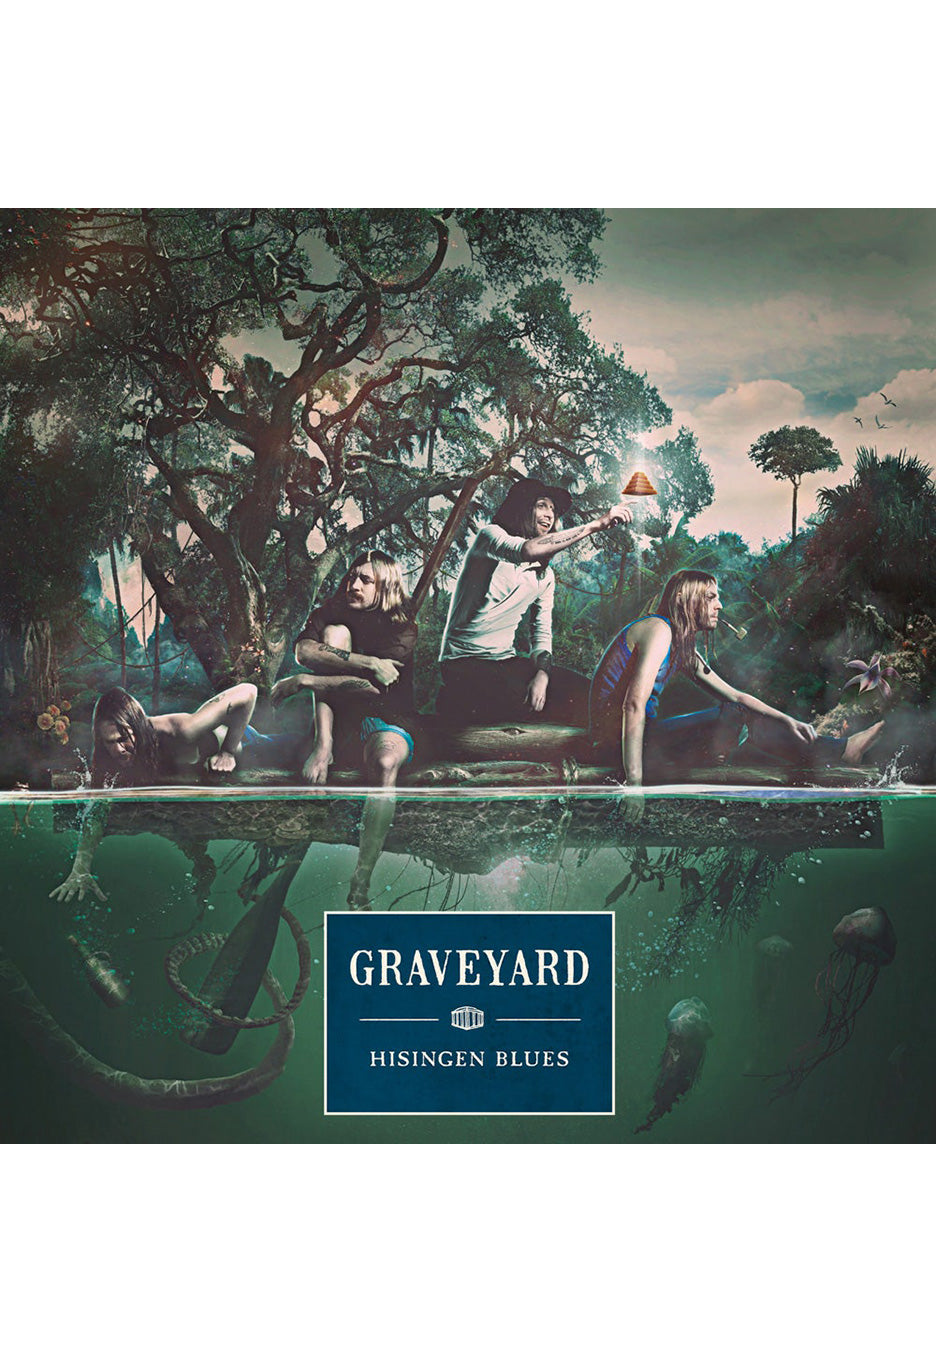 Graveyard - Hisingen Blues Opaque - Marbled Vinyl